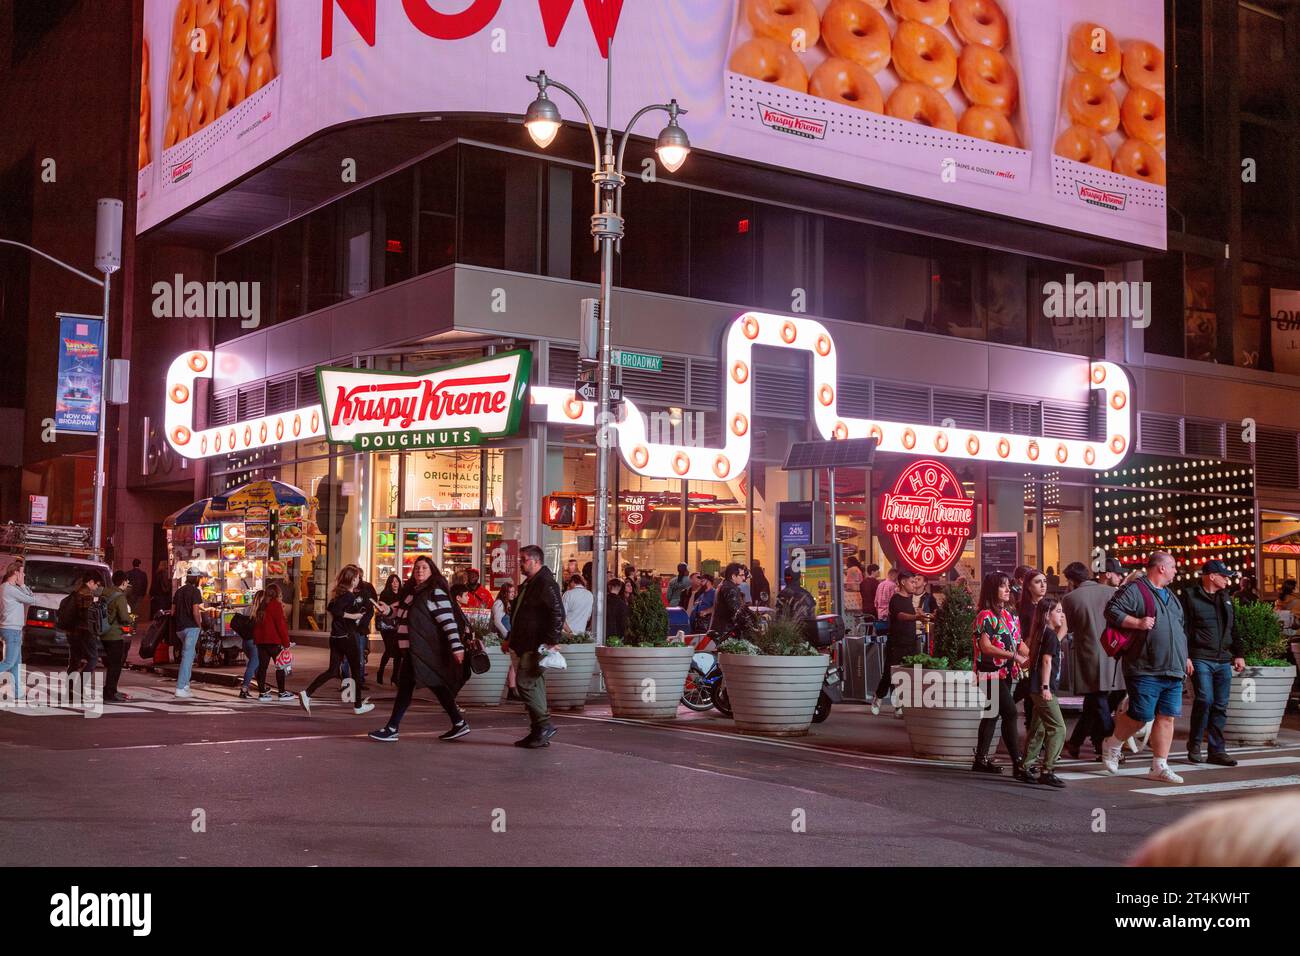 Krispy Kreme Doughnut store, Times Square, New York City, United States of America. Stock Photo